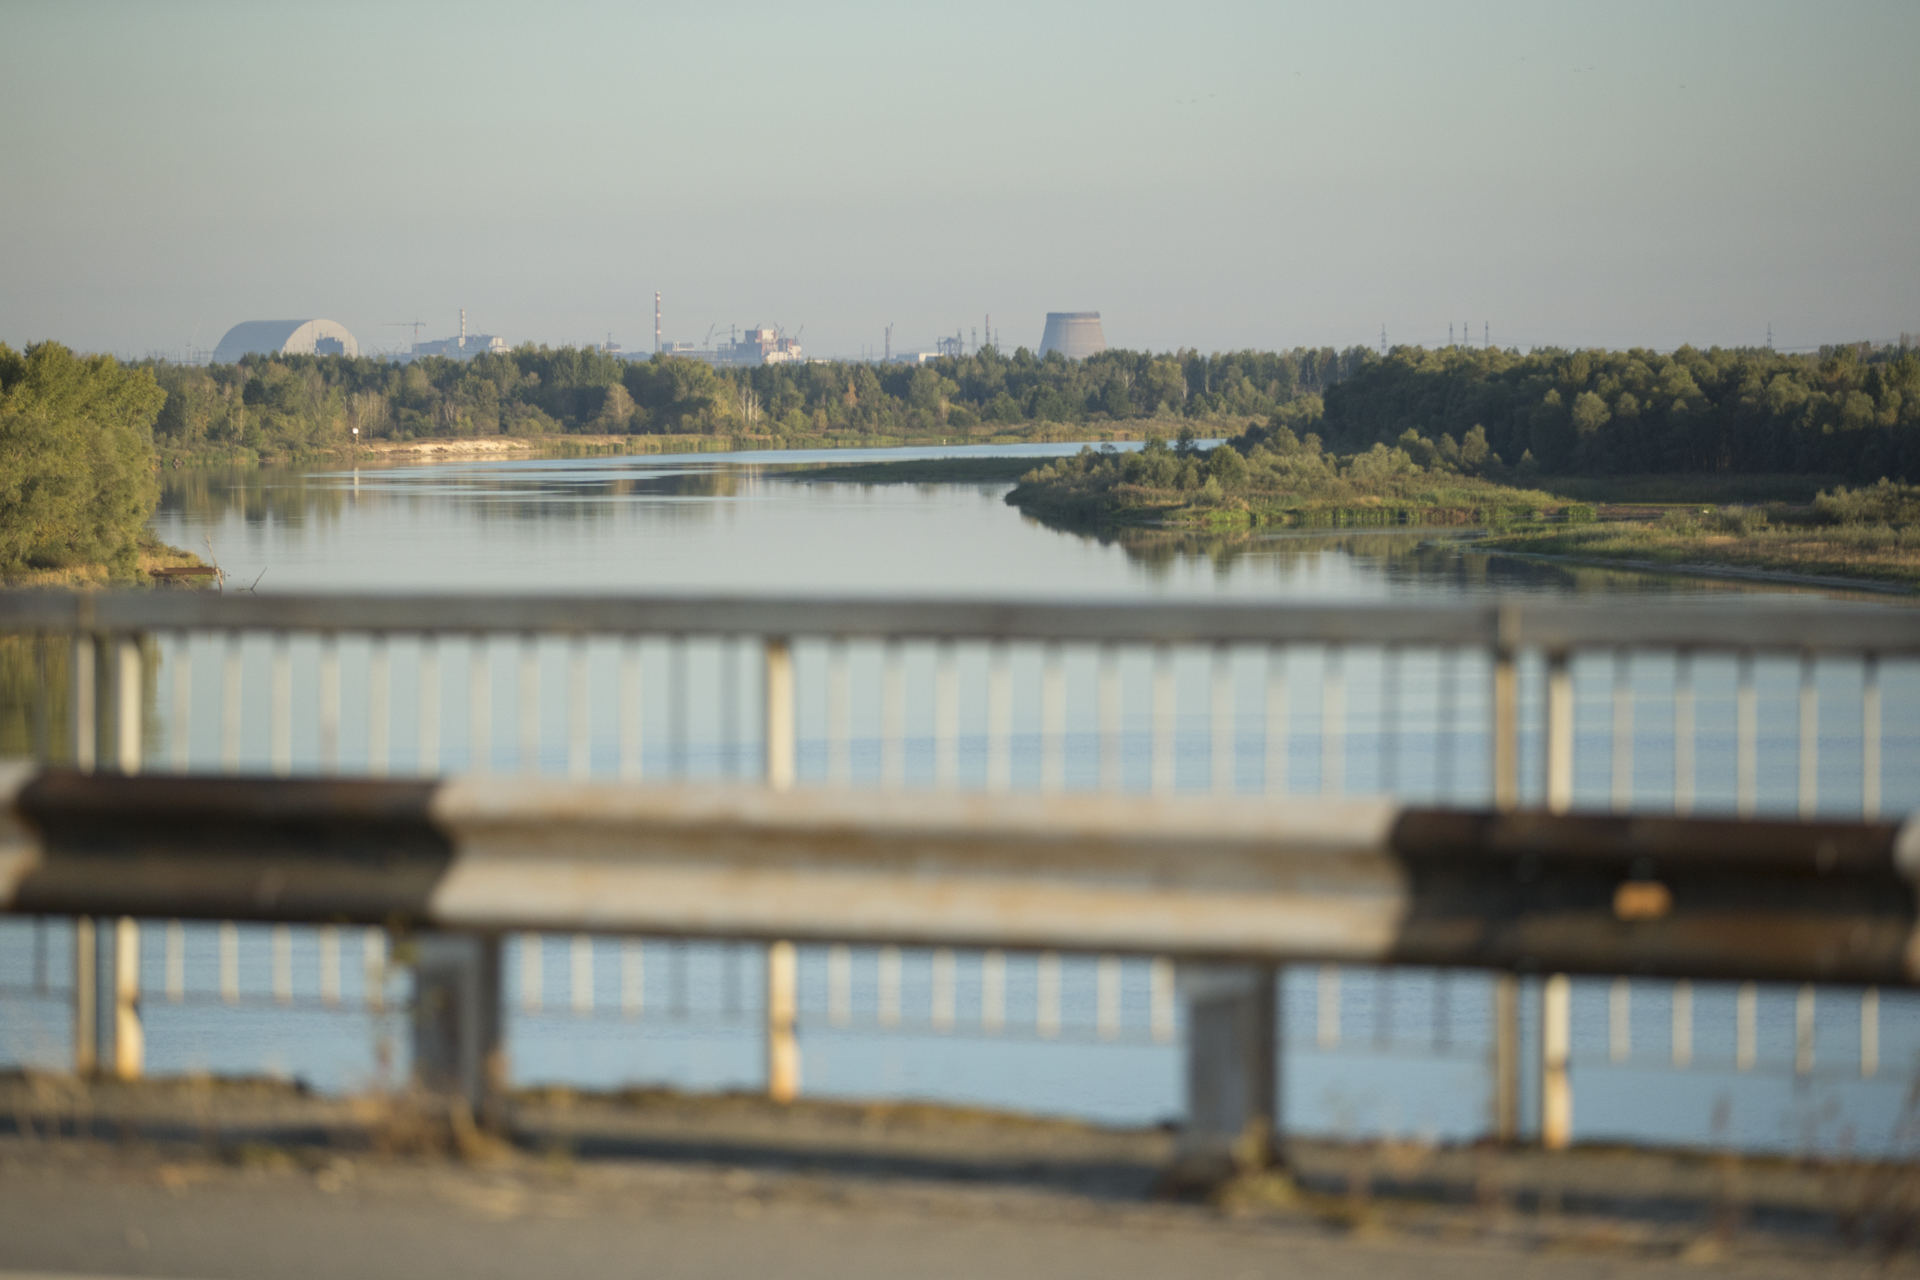  Chernobyl's exclusion zone spans 2600 square kilometres. 